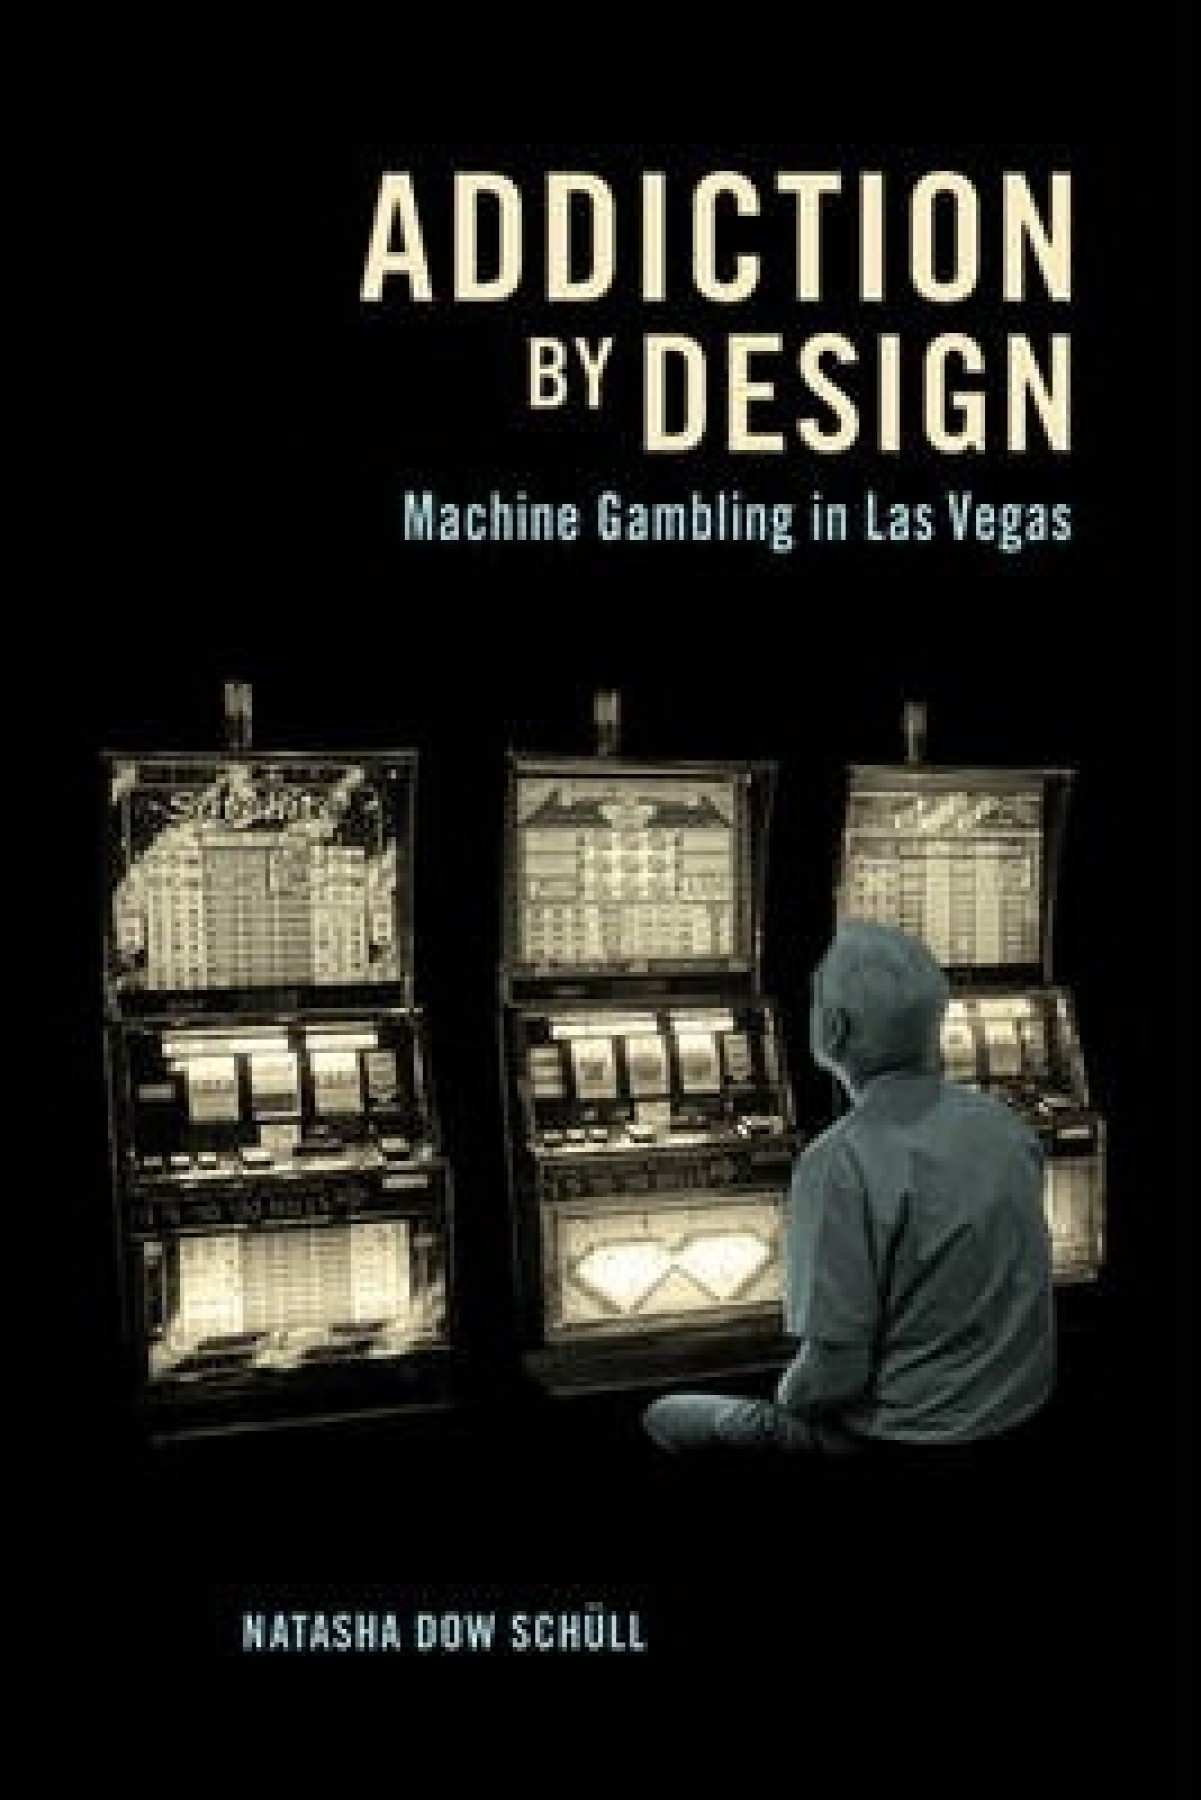 Addiction by design: Machine gambling in Las Vegas